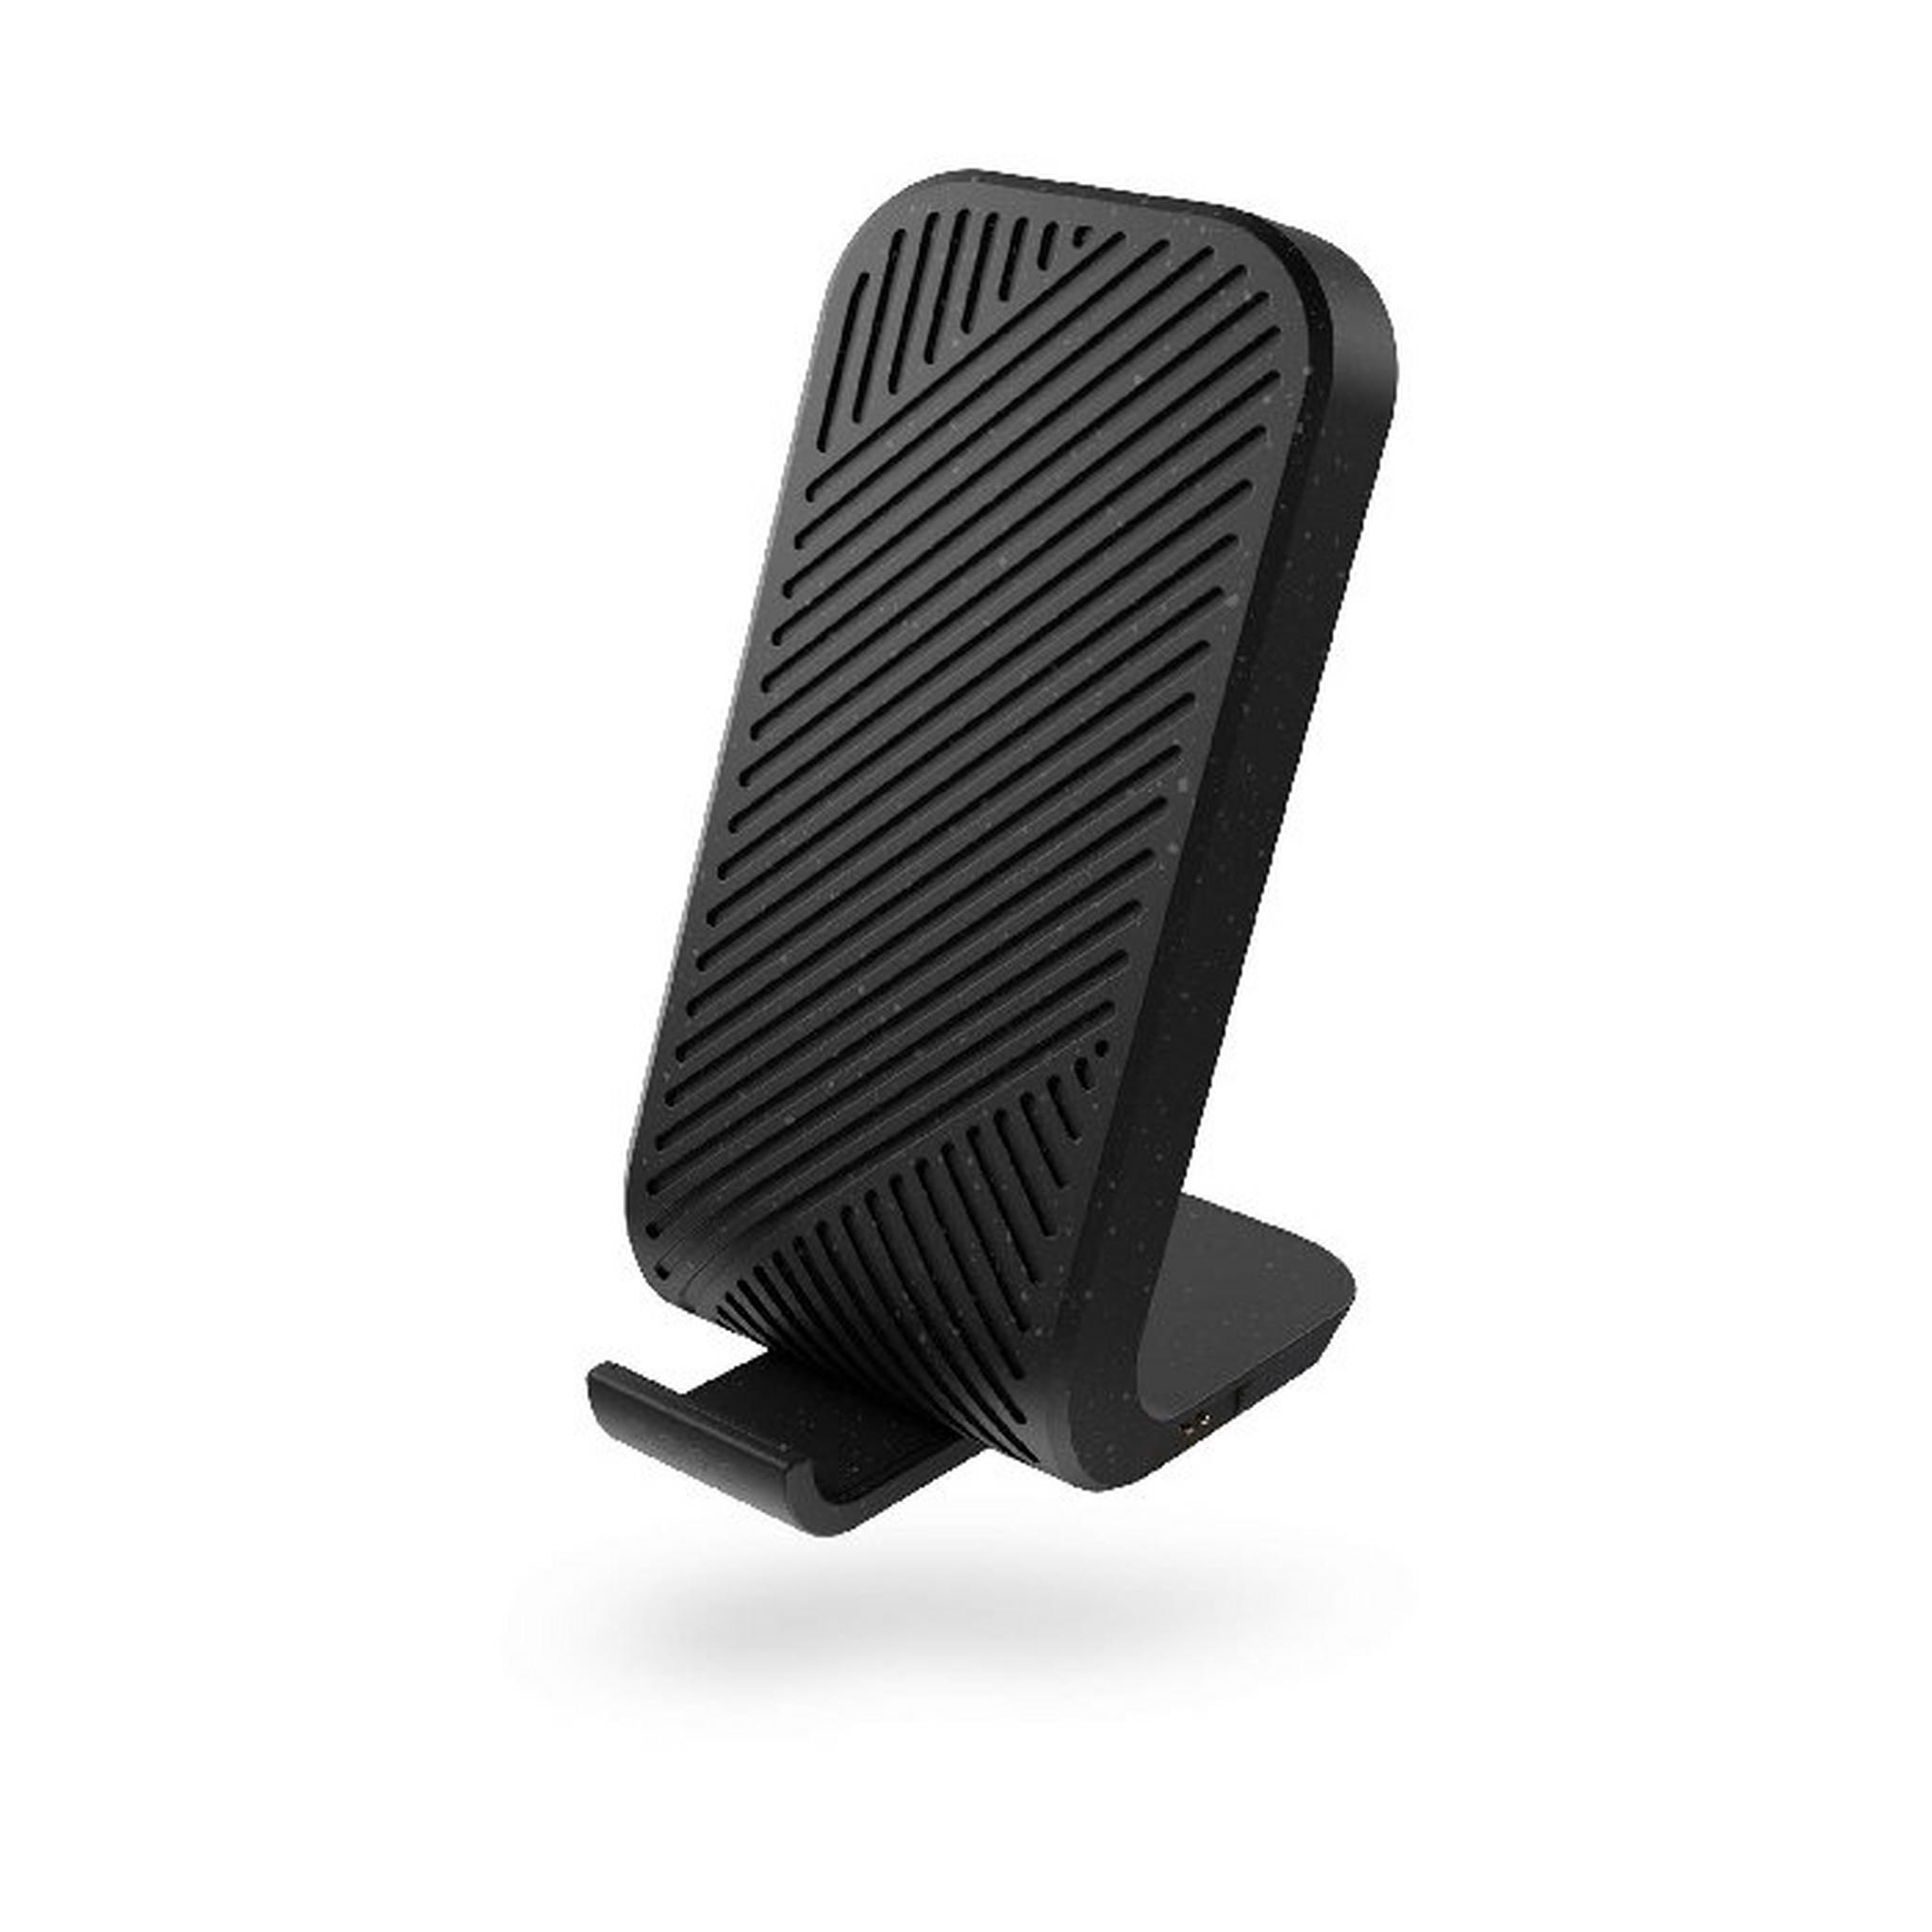 ZENS Stand Wireless Charger, ZEMSC2P/00 – Black